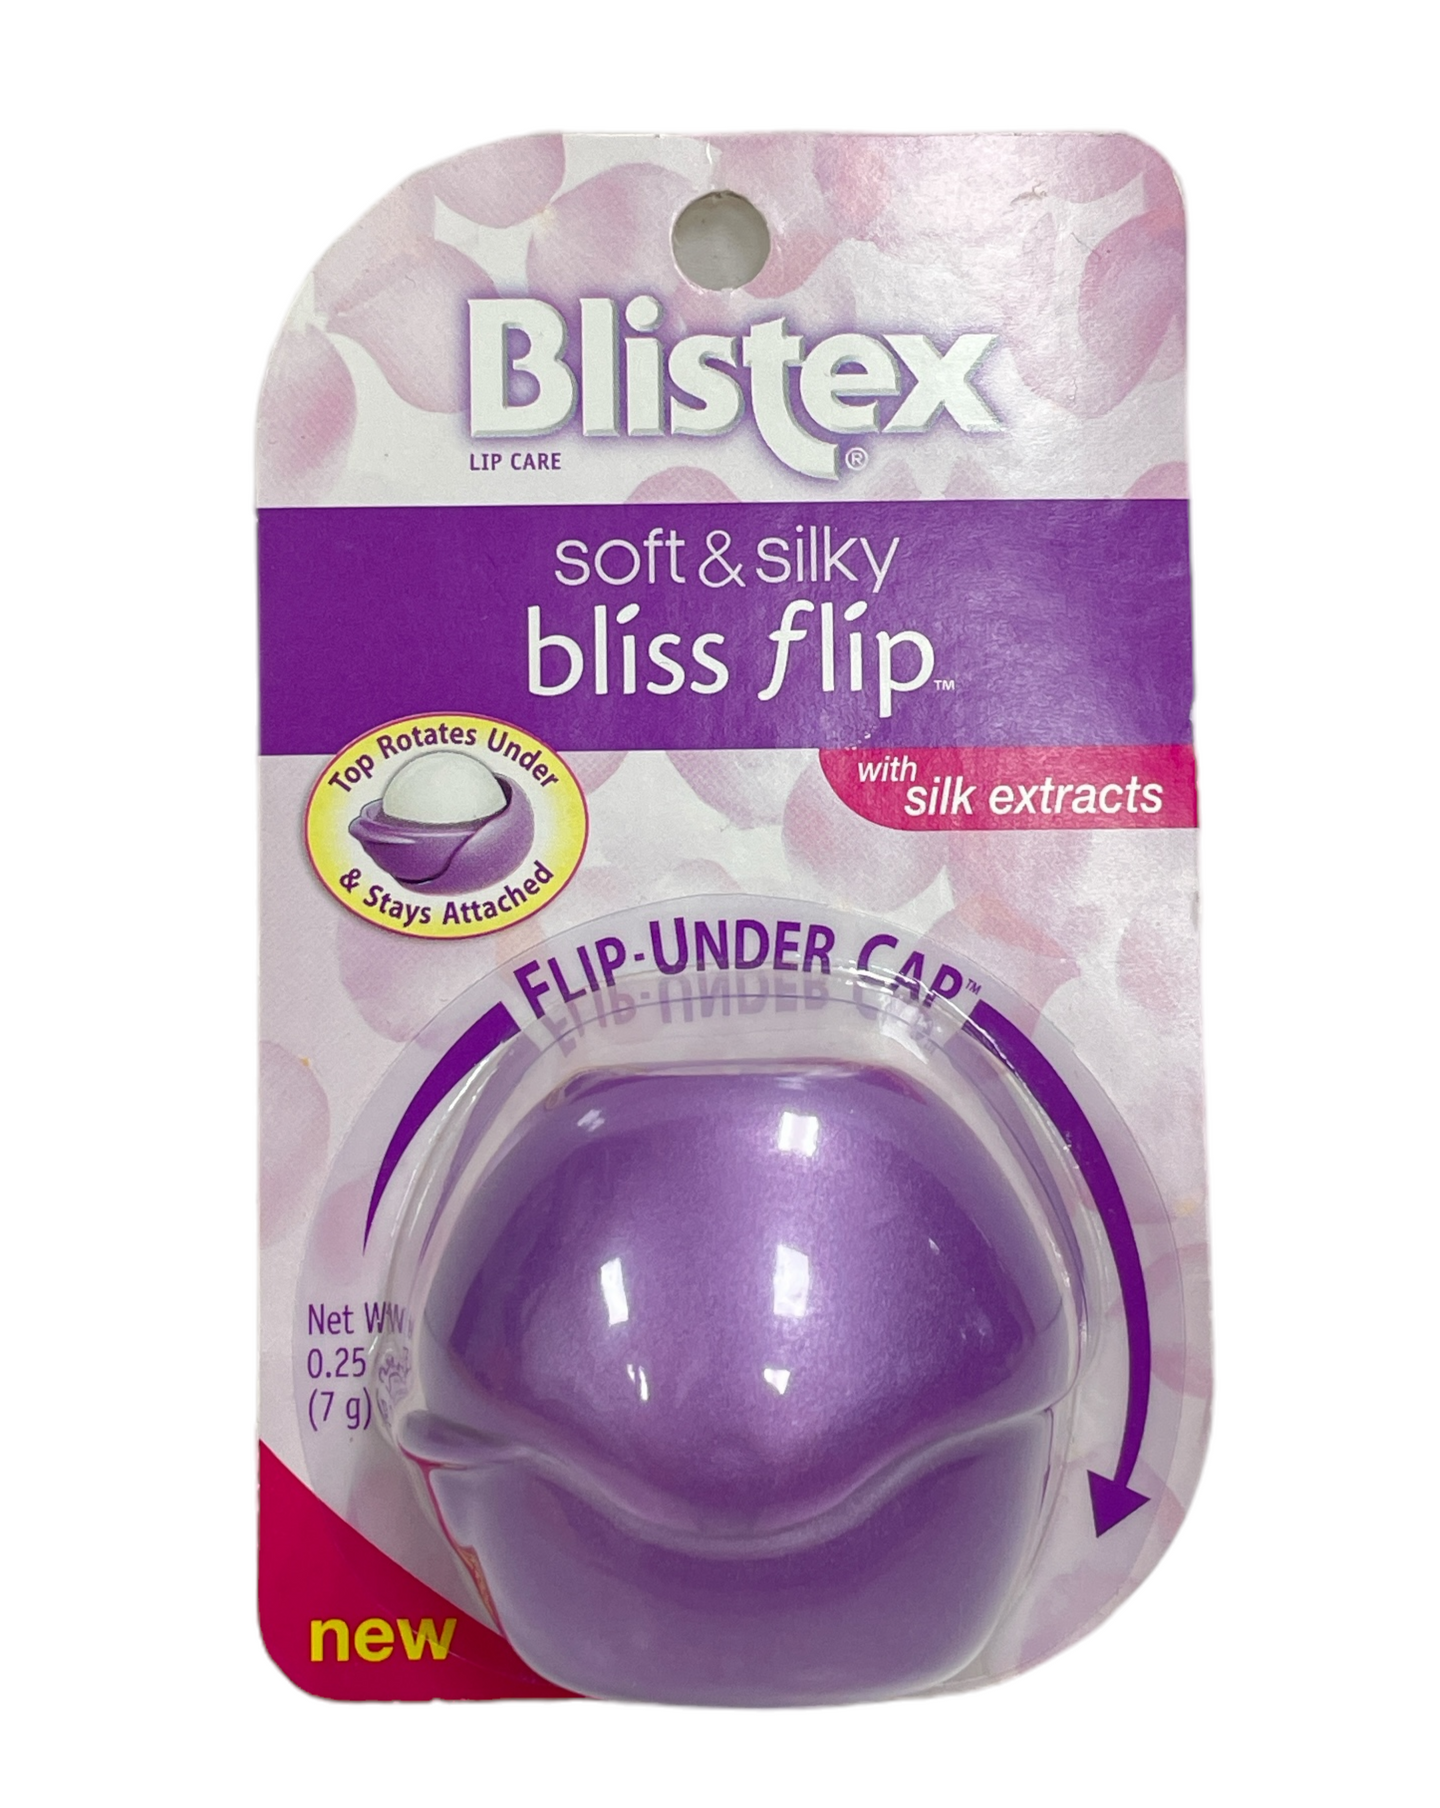 Blistex Lip Care Soft & Silky Bliss Flip (0.25oz / 7g)